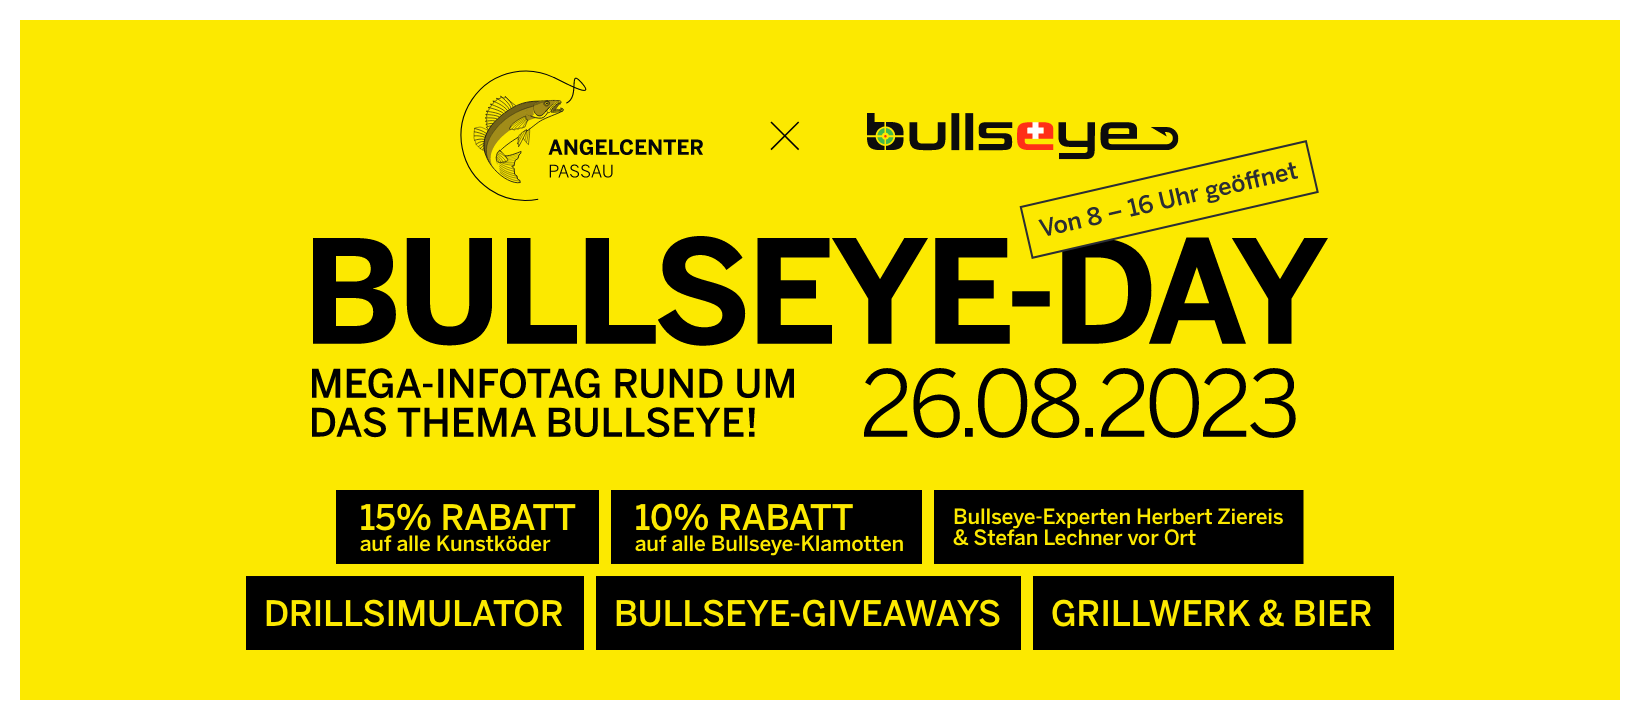 Bullseye-Day 26.08.23 Angelcenter Passau